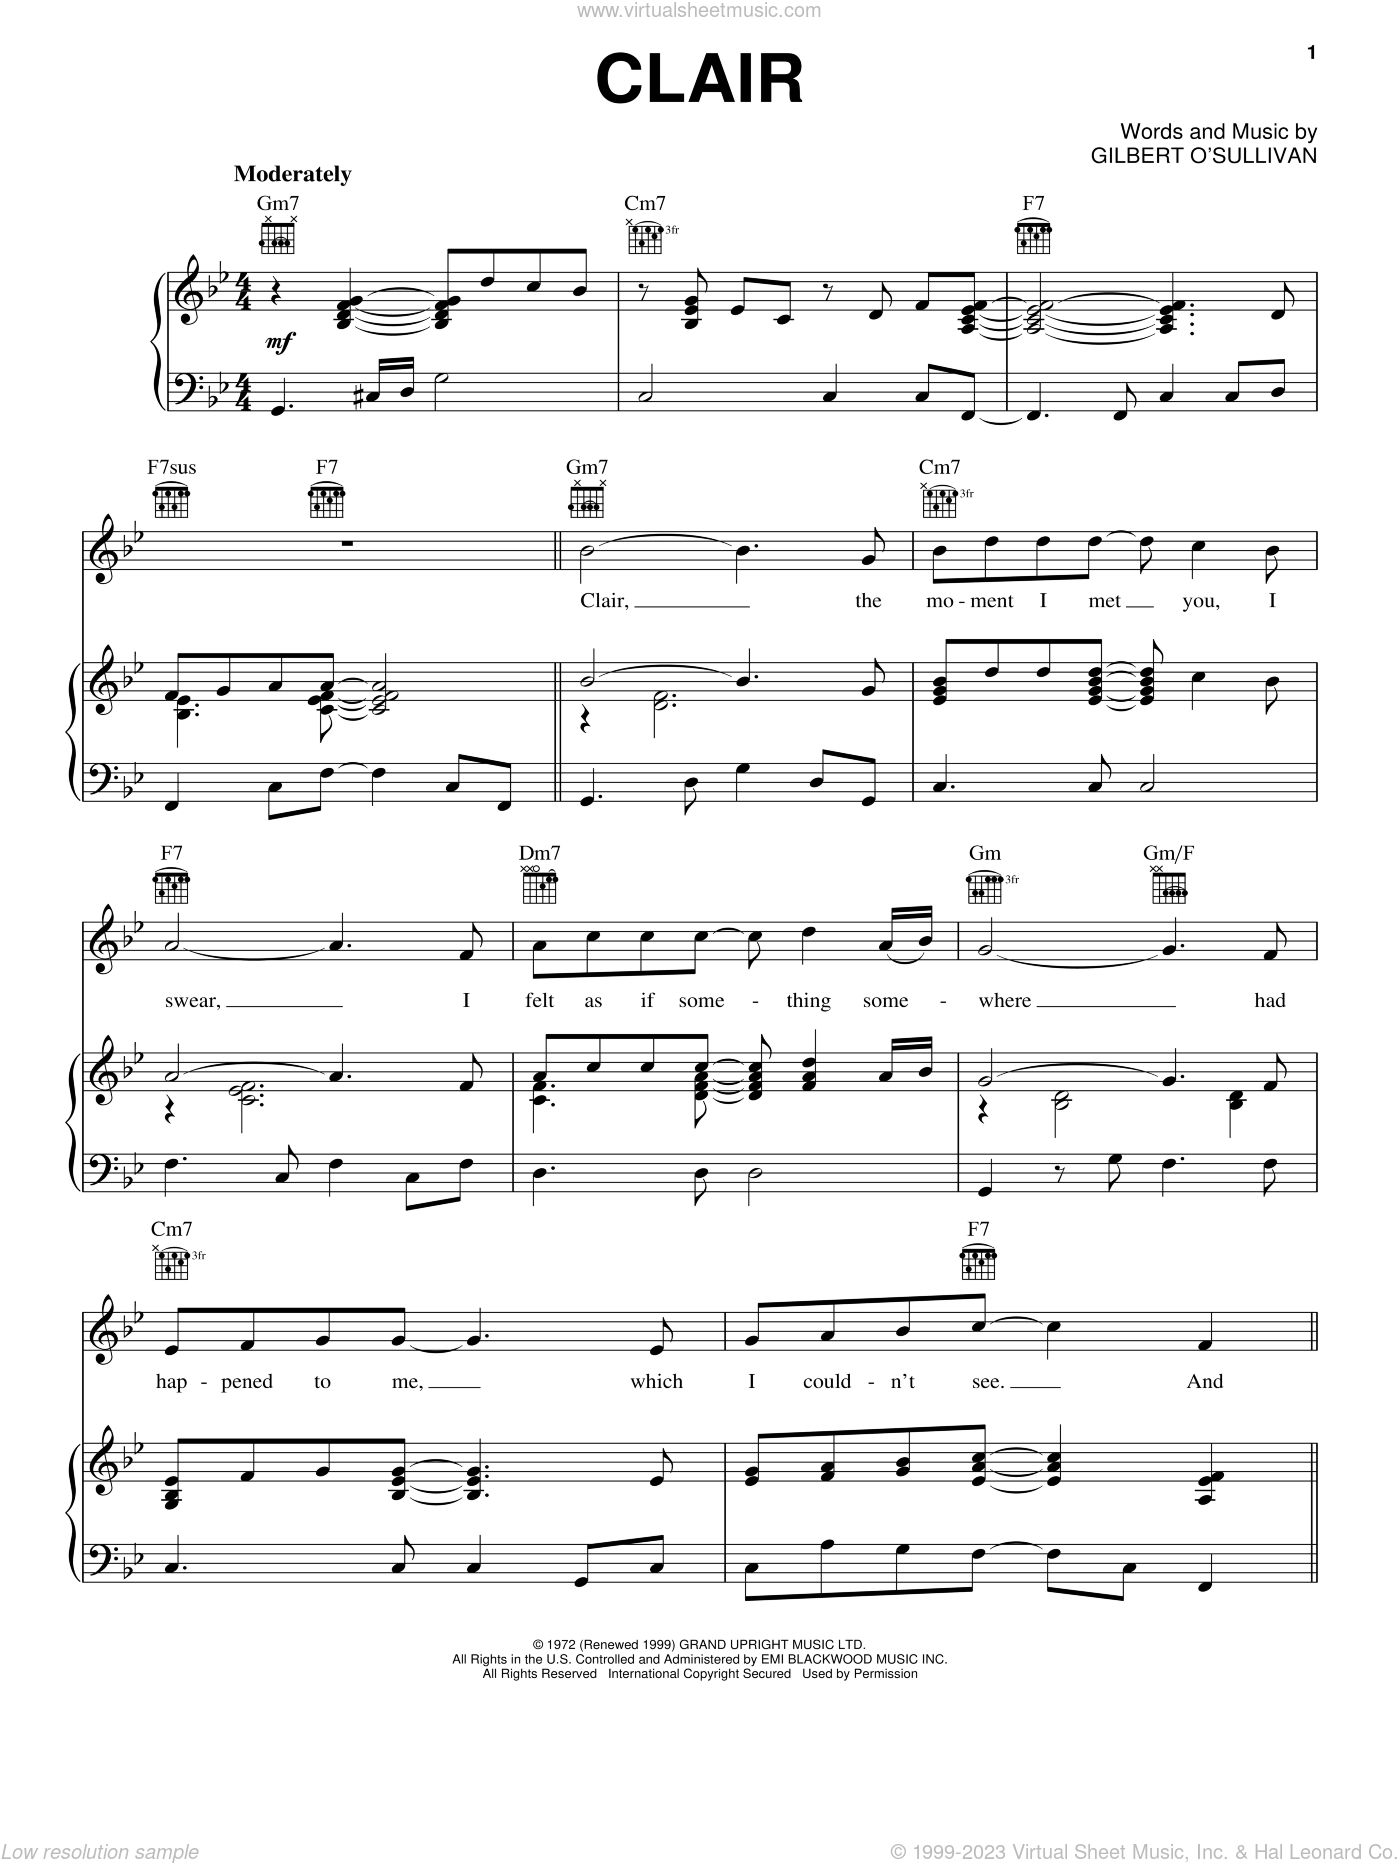 Alone Again (Naturally) by Gilbert O'Sullivan - Piano, Vocal, Guitar -  Digital Sheet Music